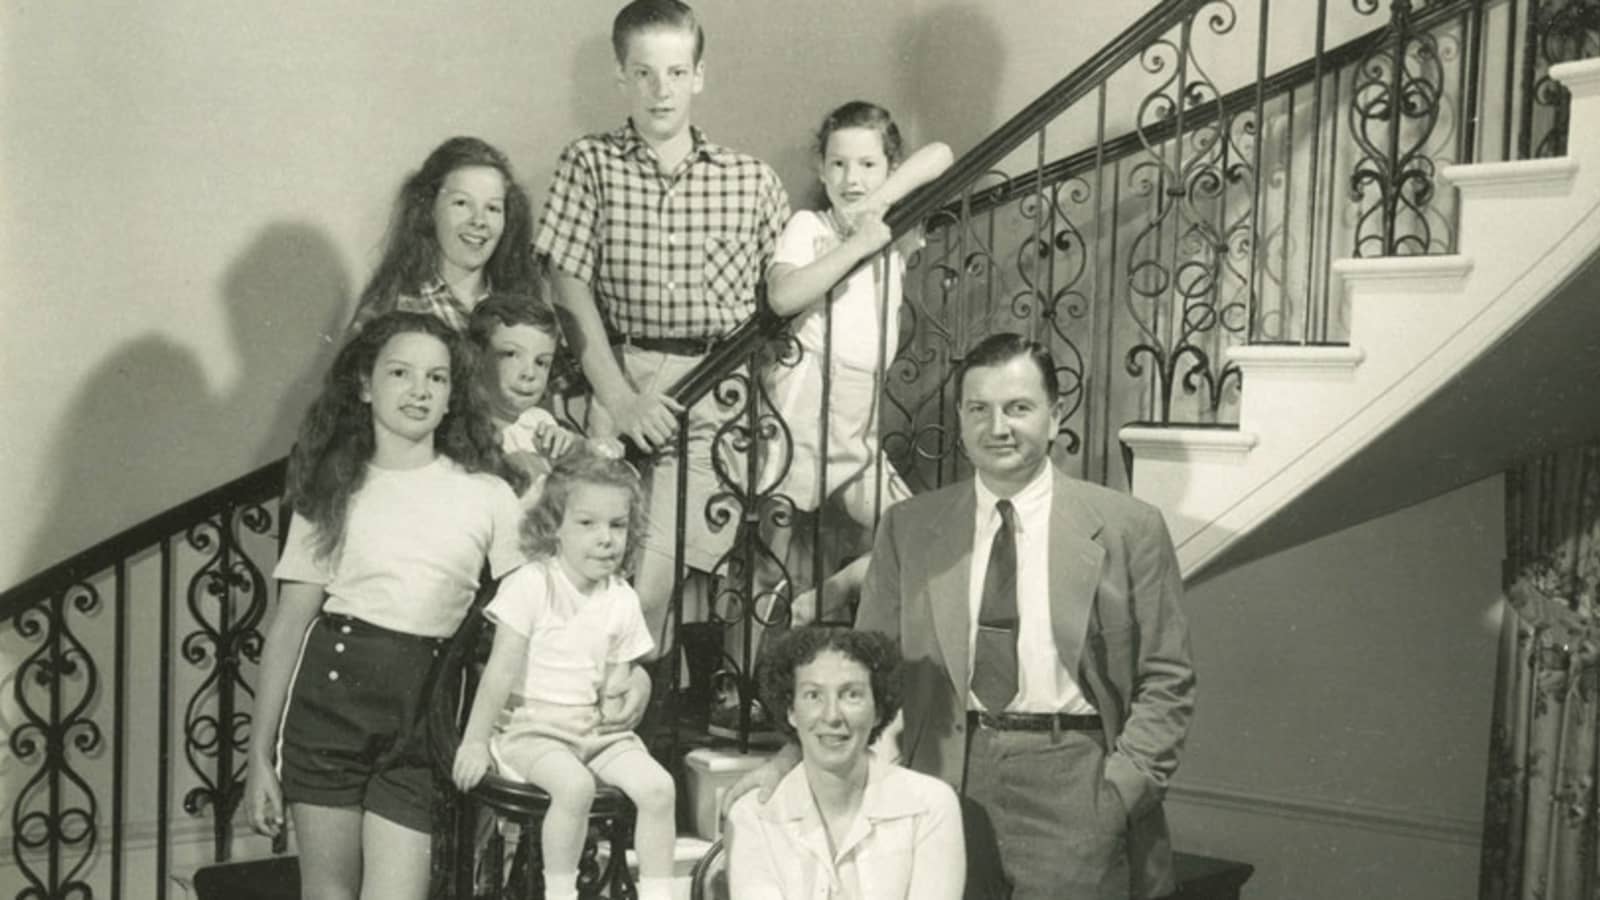 David Rockefeller Jr. shares 4 secrets to wealth and family